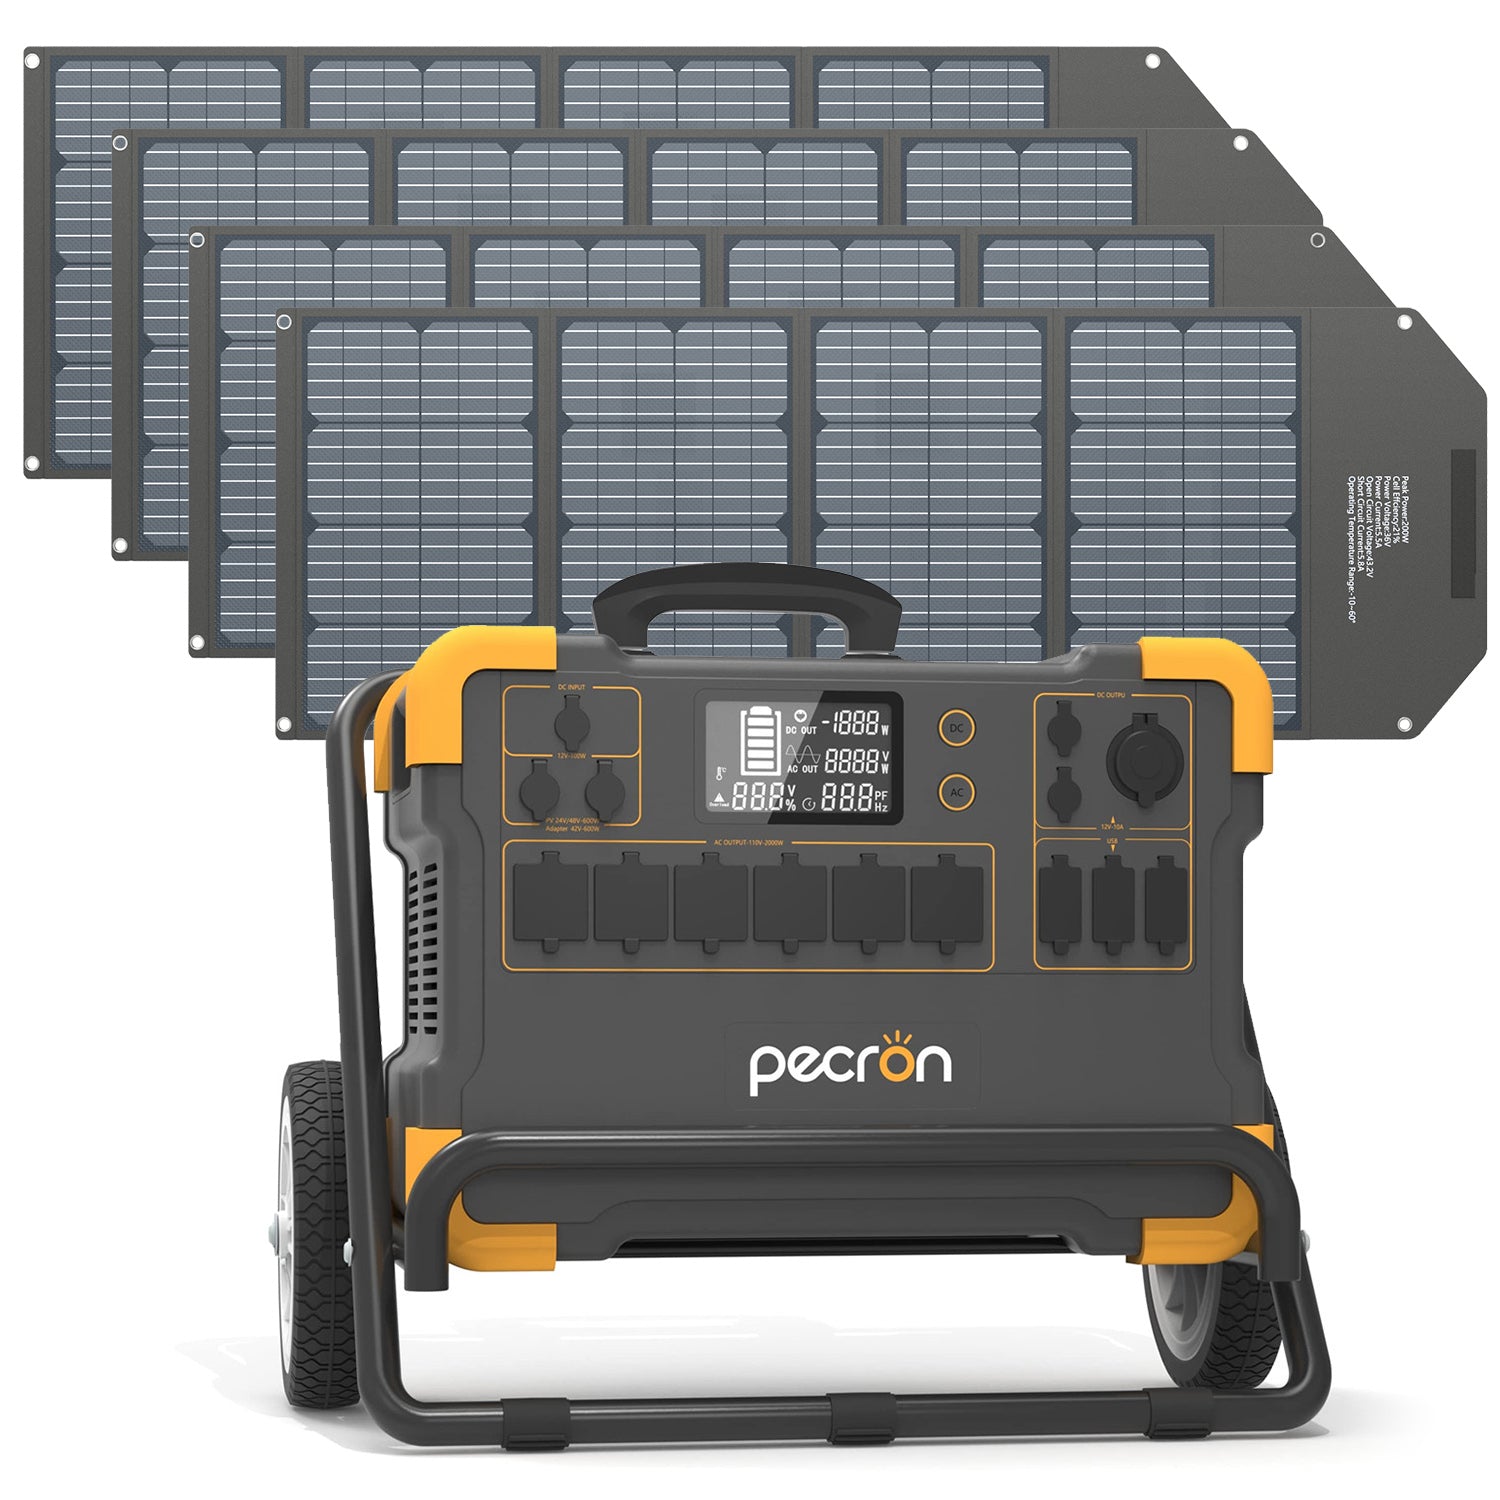 PECRON E3000 3108Wh Portable Power Station